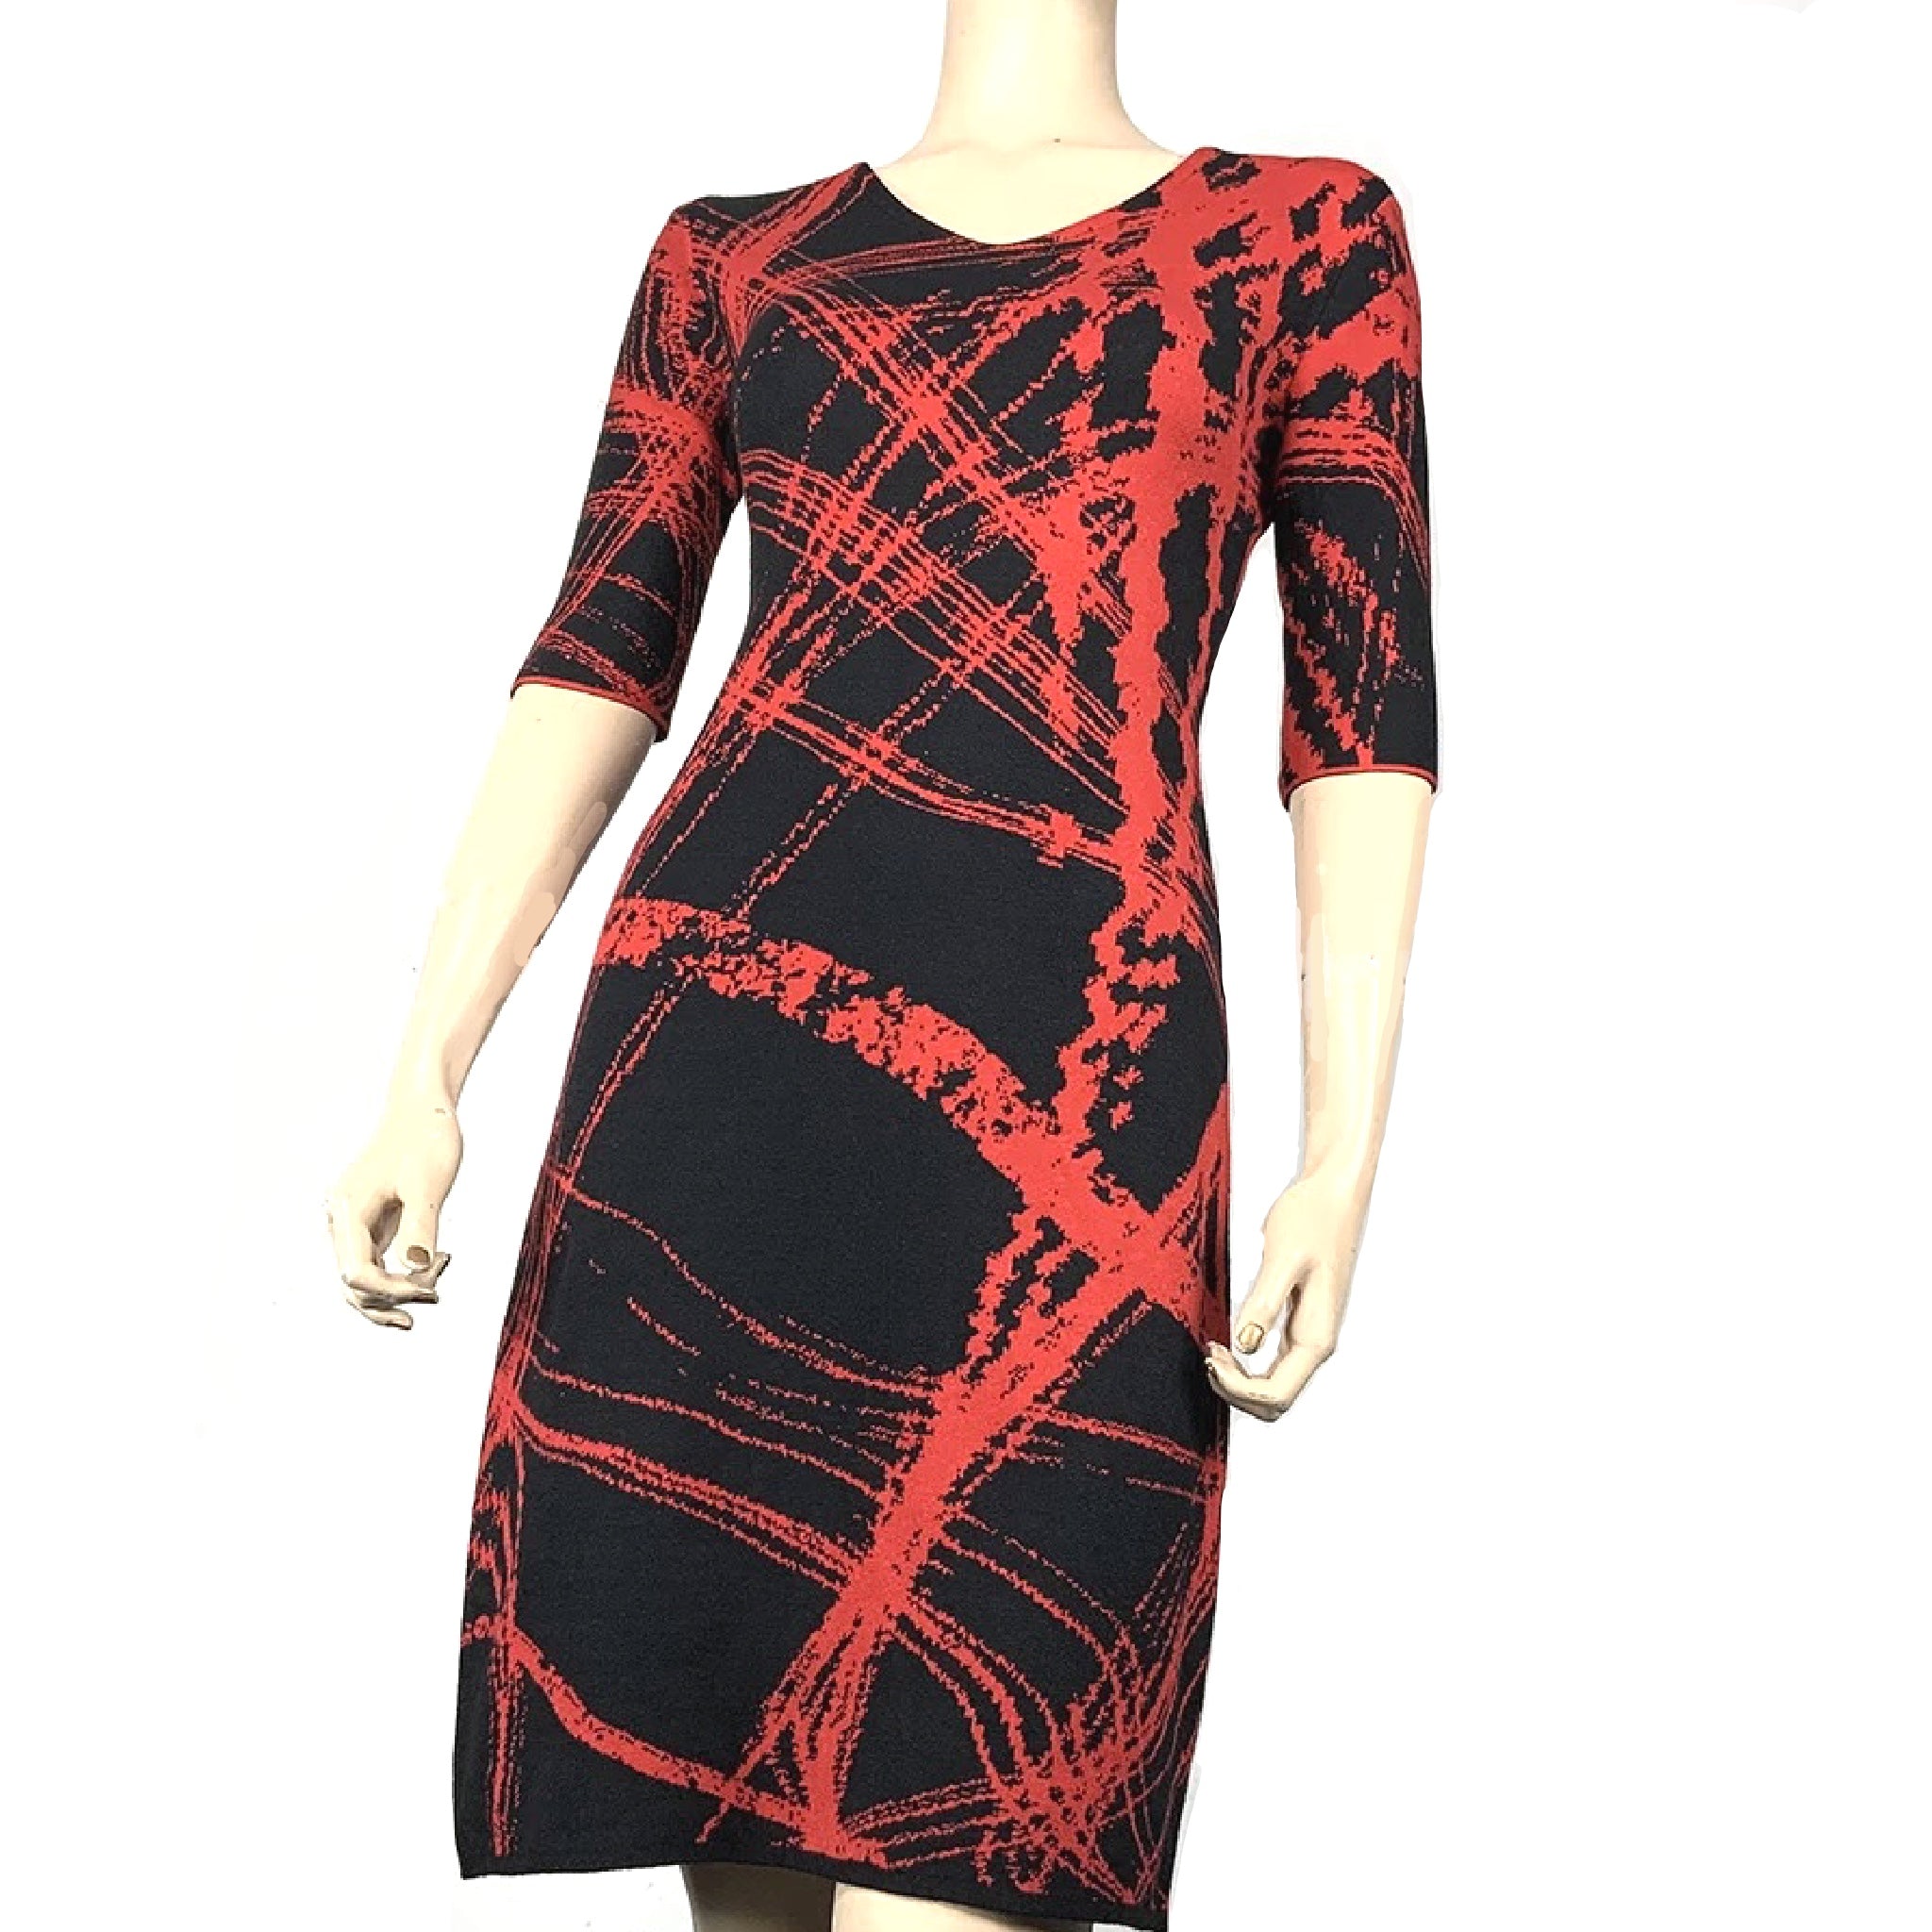 Mirage Amanda Dress Black and Red